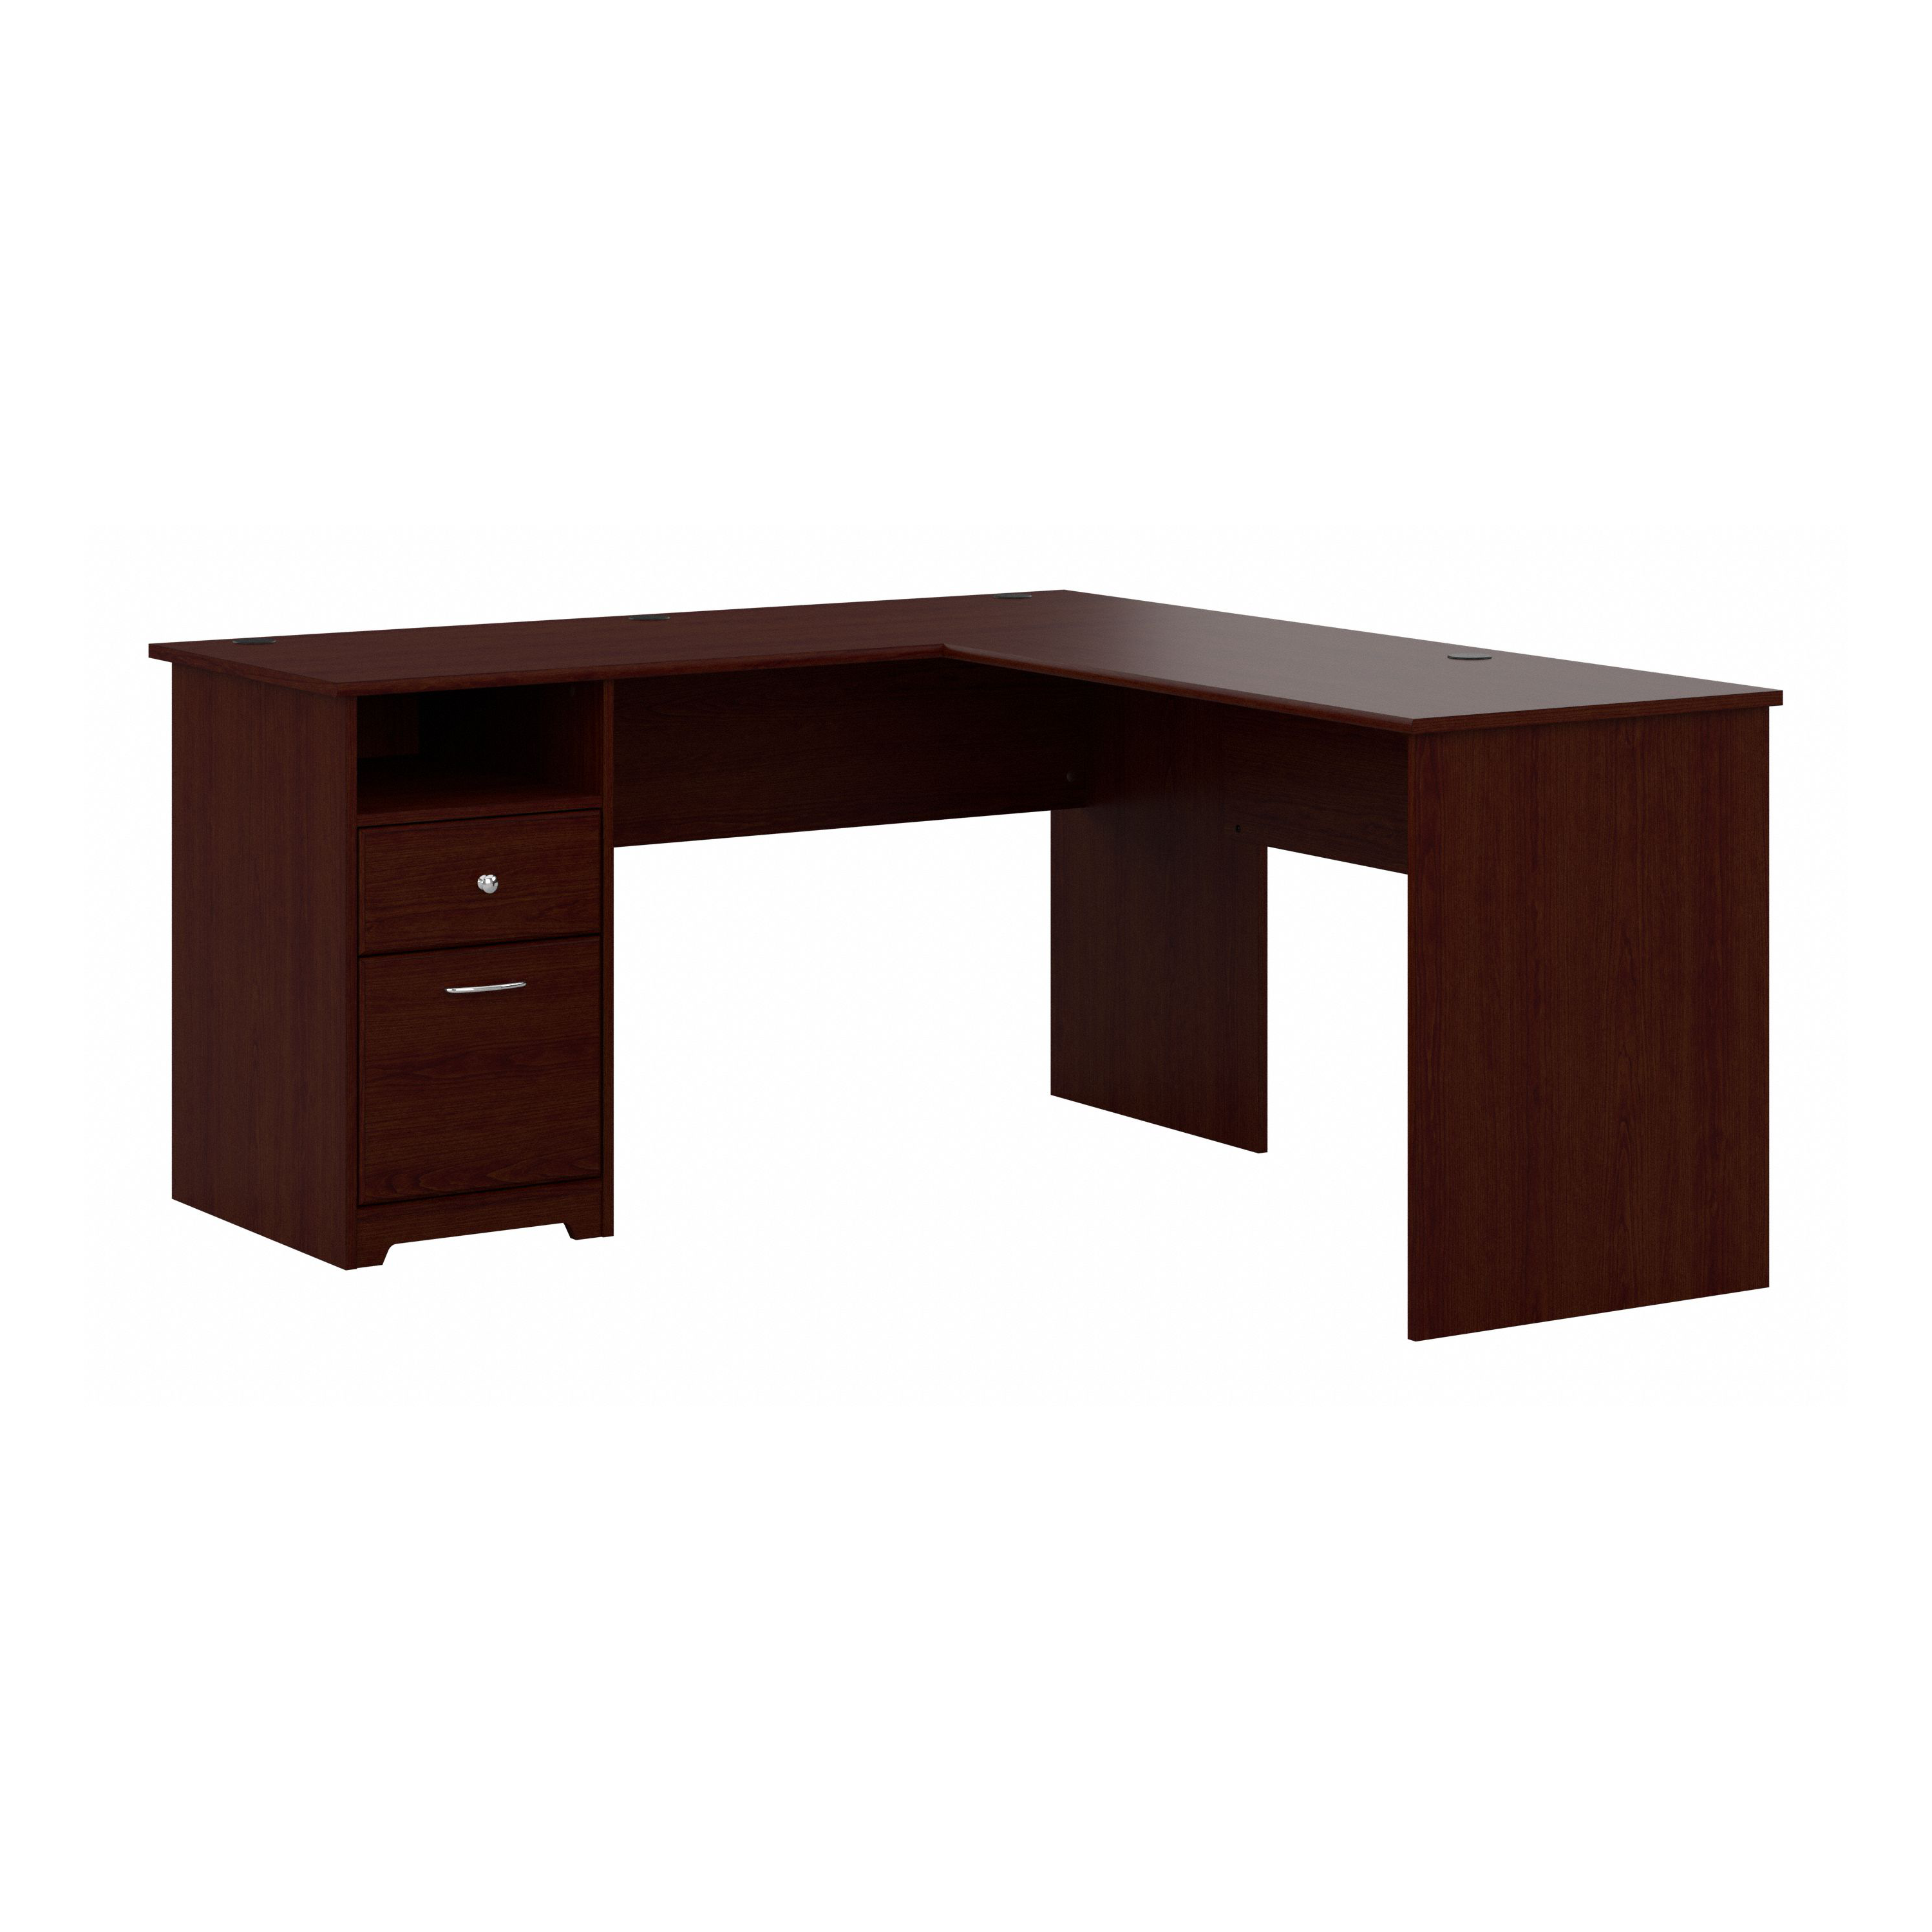 Shop Bush Furniture Cabot 60W L Shaped Computer Desk with Drawers 02 CAB044HVC #color_harvest cherry